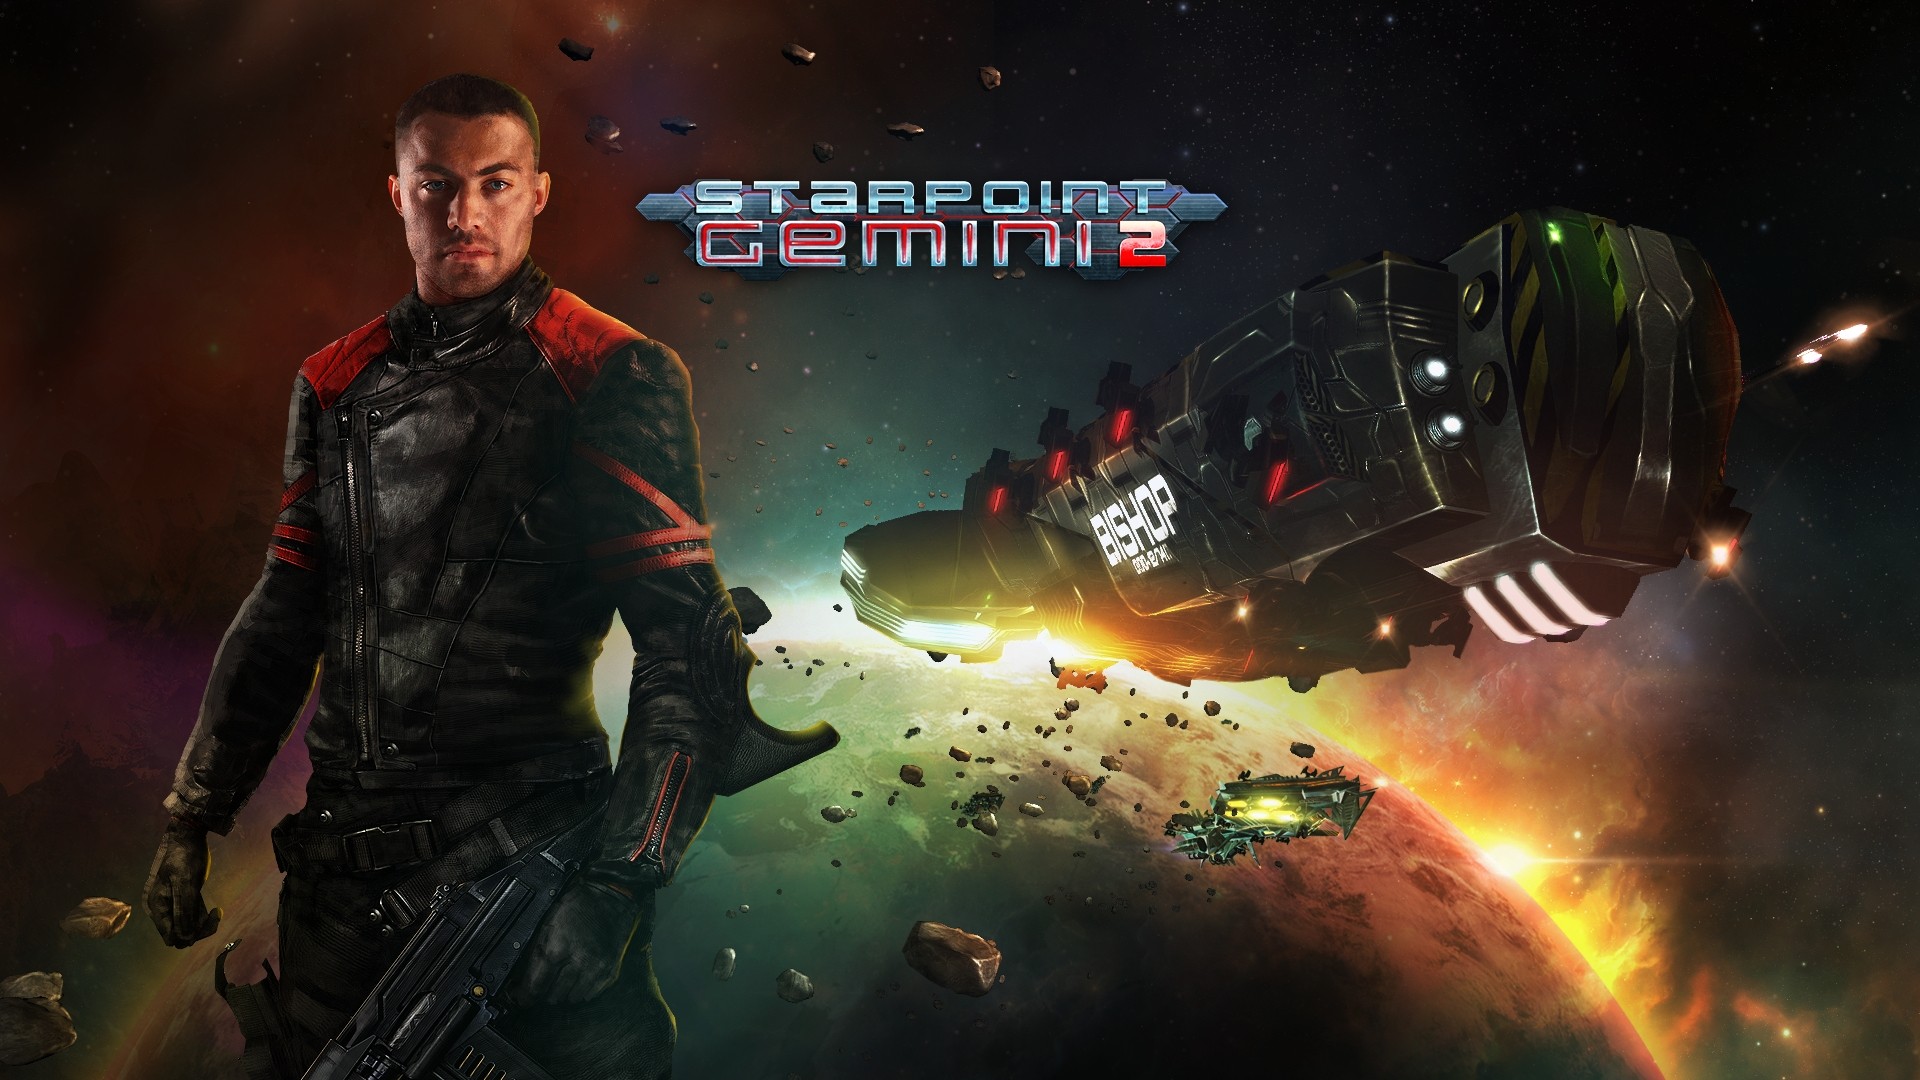 soldier, Starpoint Gemini 2, Video games, Science fiction, Digital art, Spaceship Wallpaper